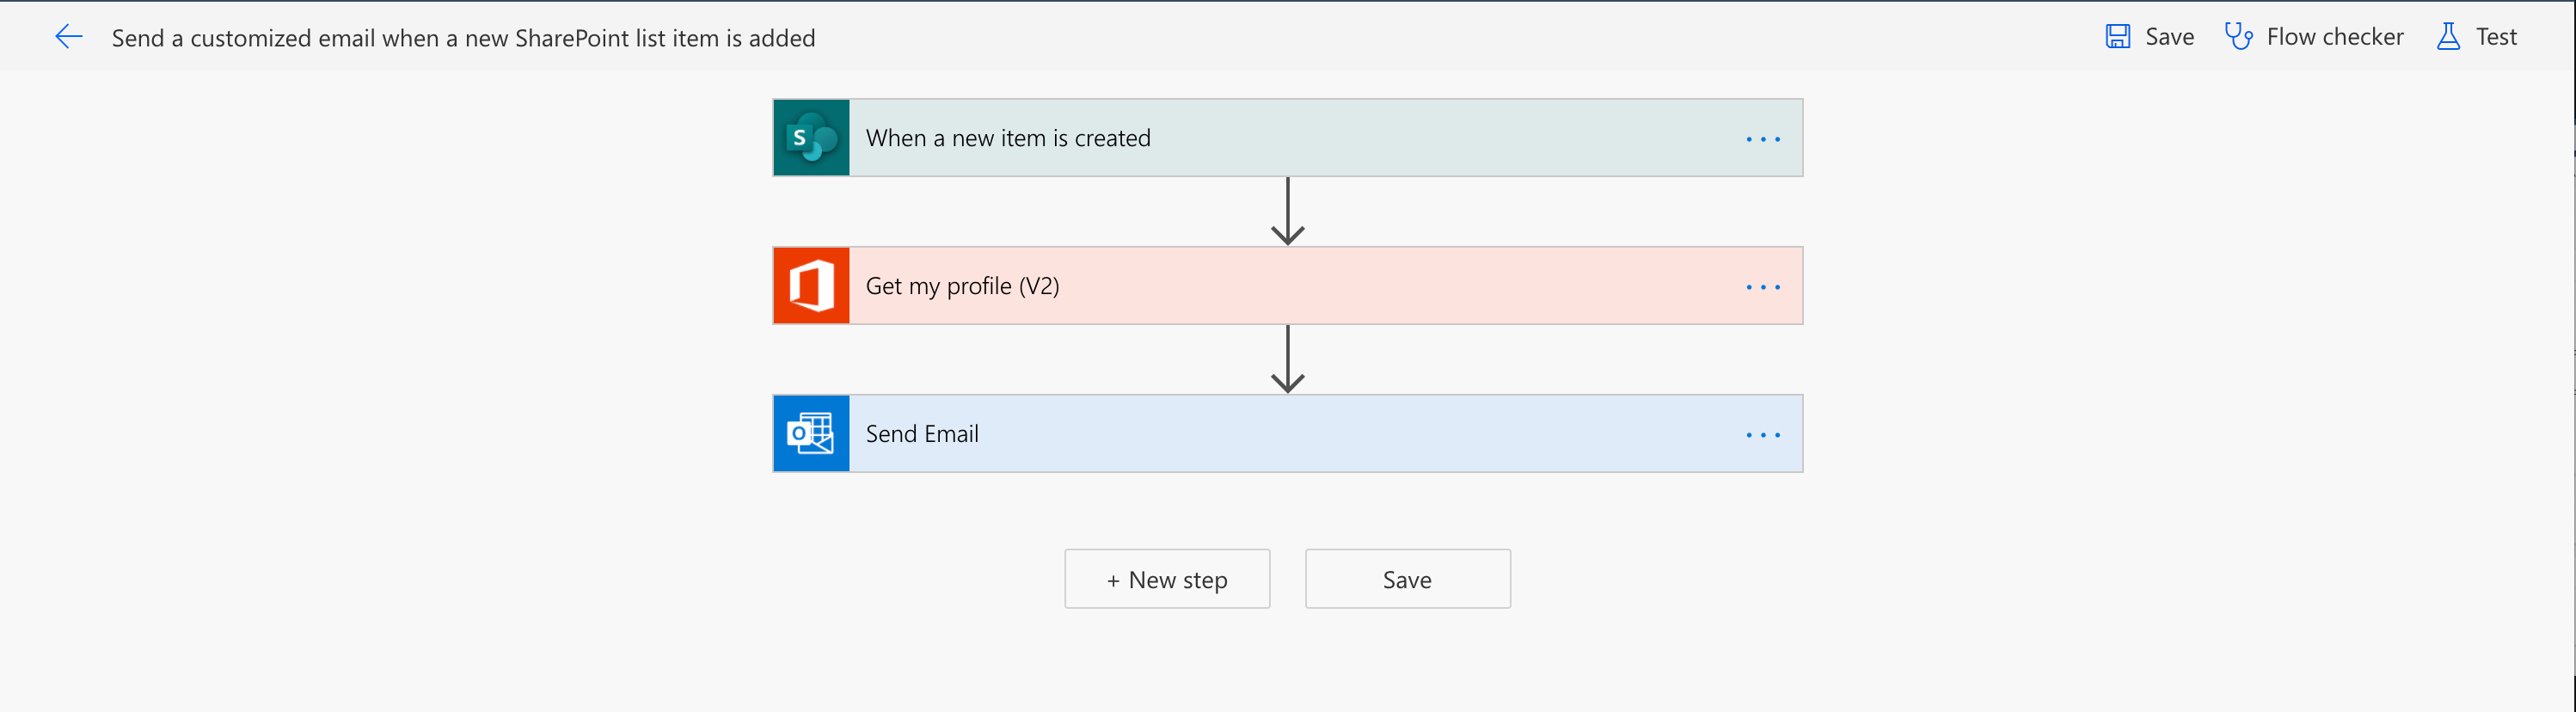 Flow designer - send email when an item is added in a list - flow designer